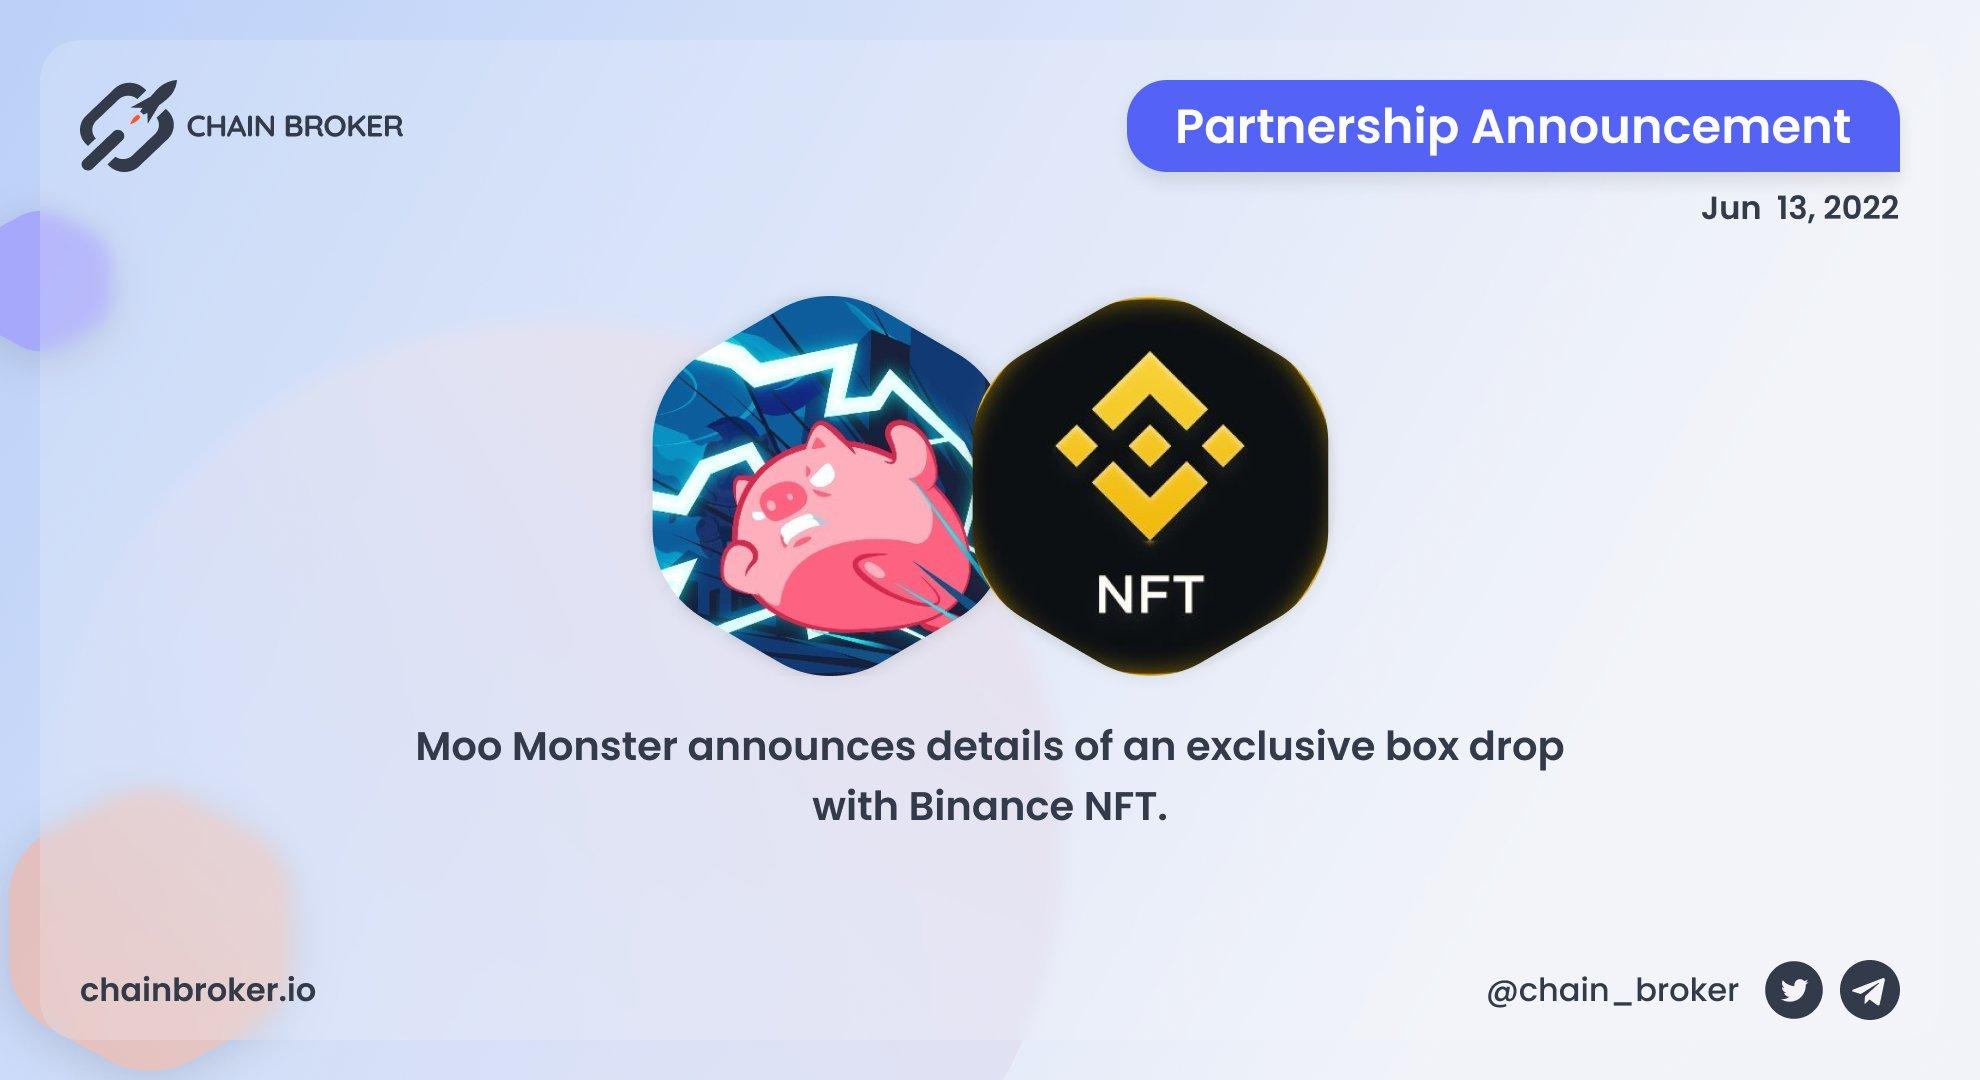 Moo Monster & Binance NFT box drop